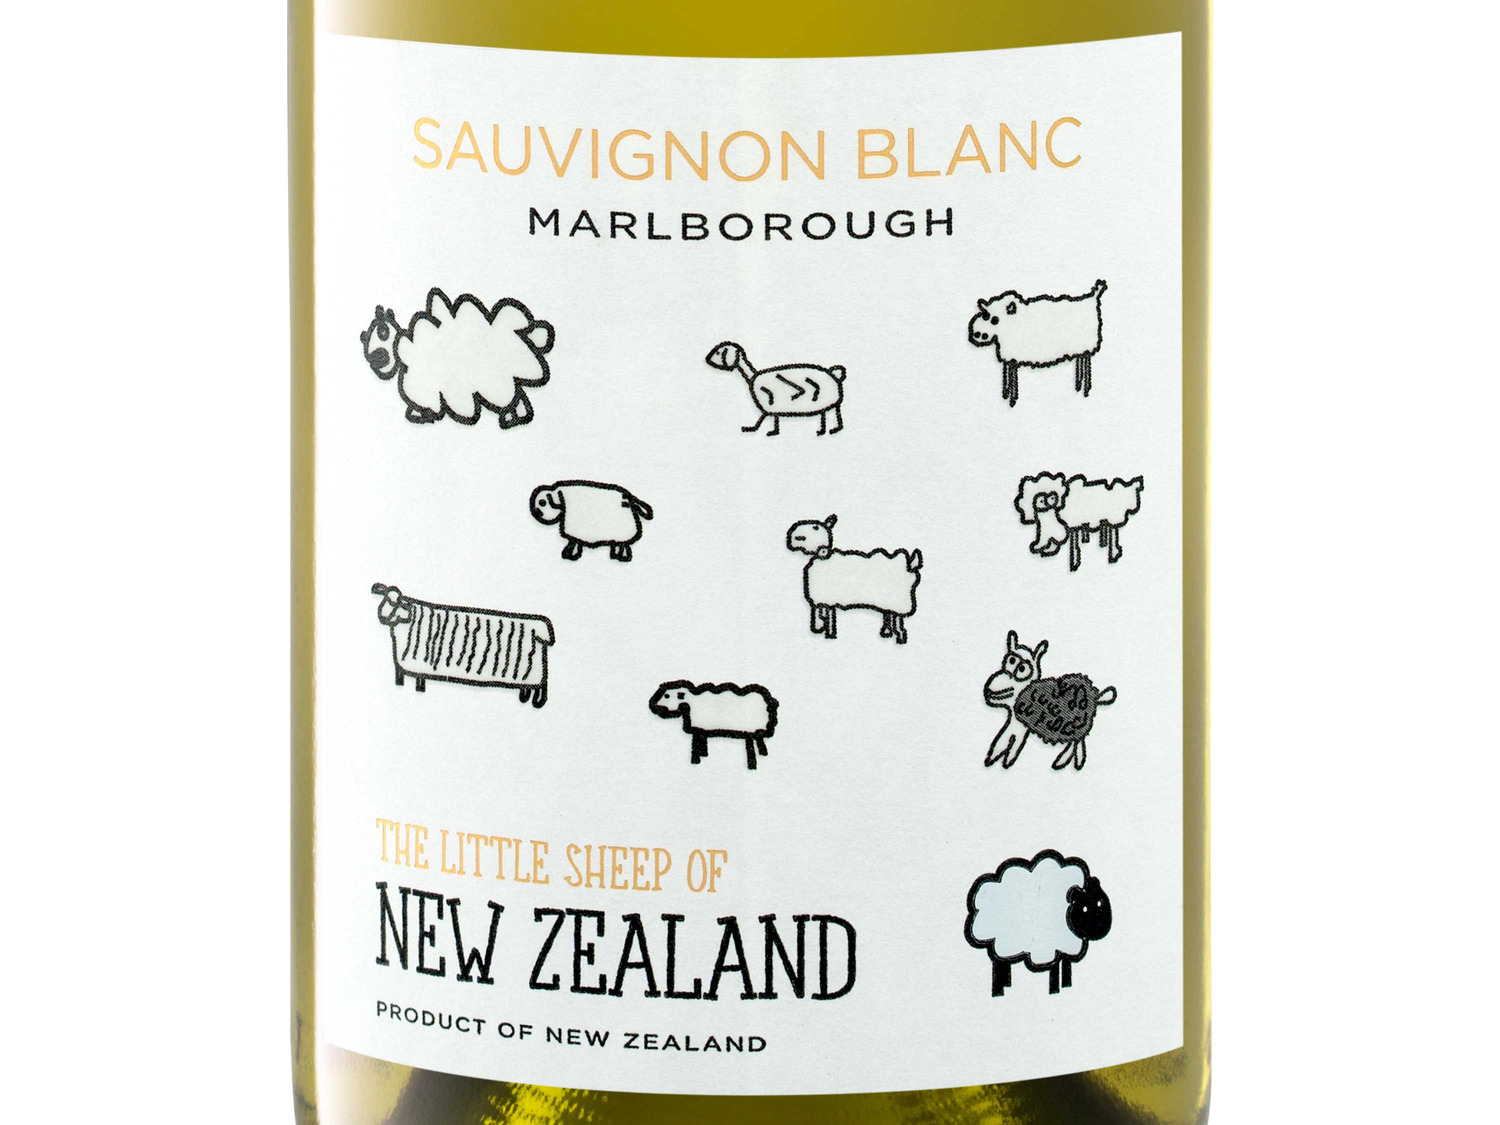 Sheep Blanc Marlborough Little Neuseeland tr… Sauvignon